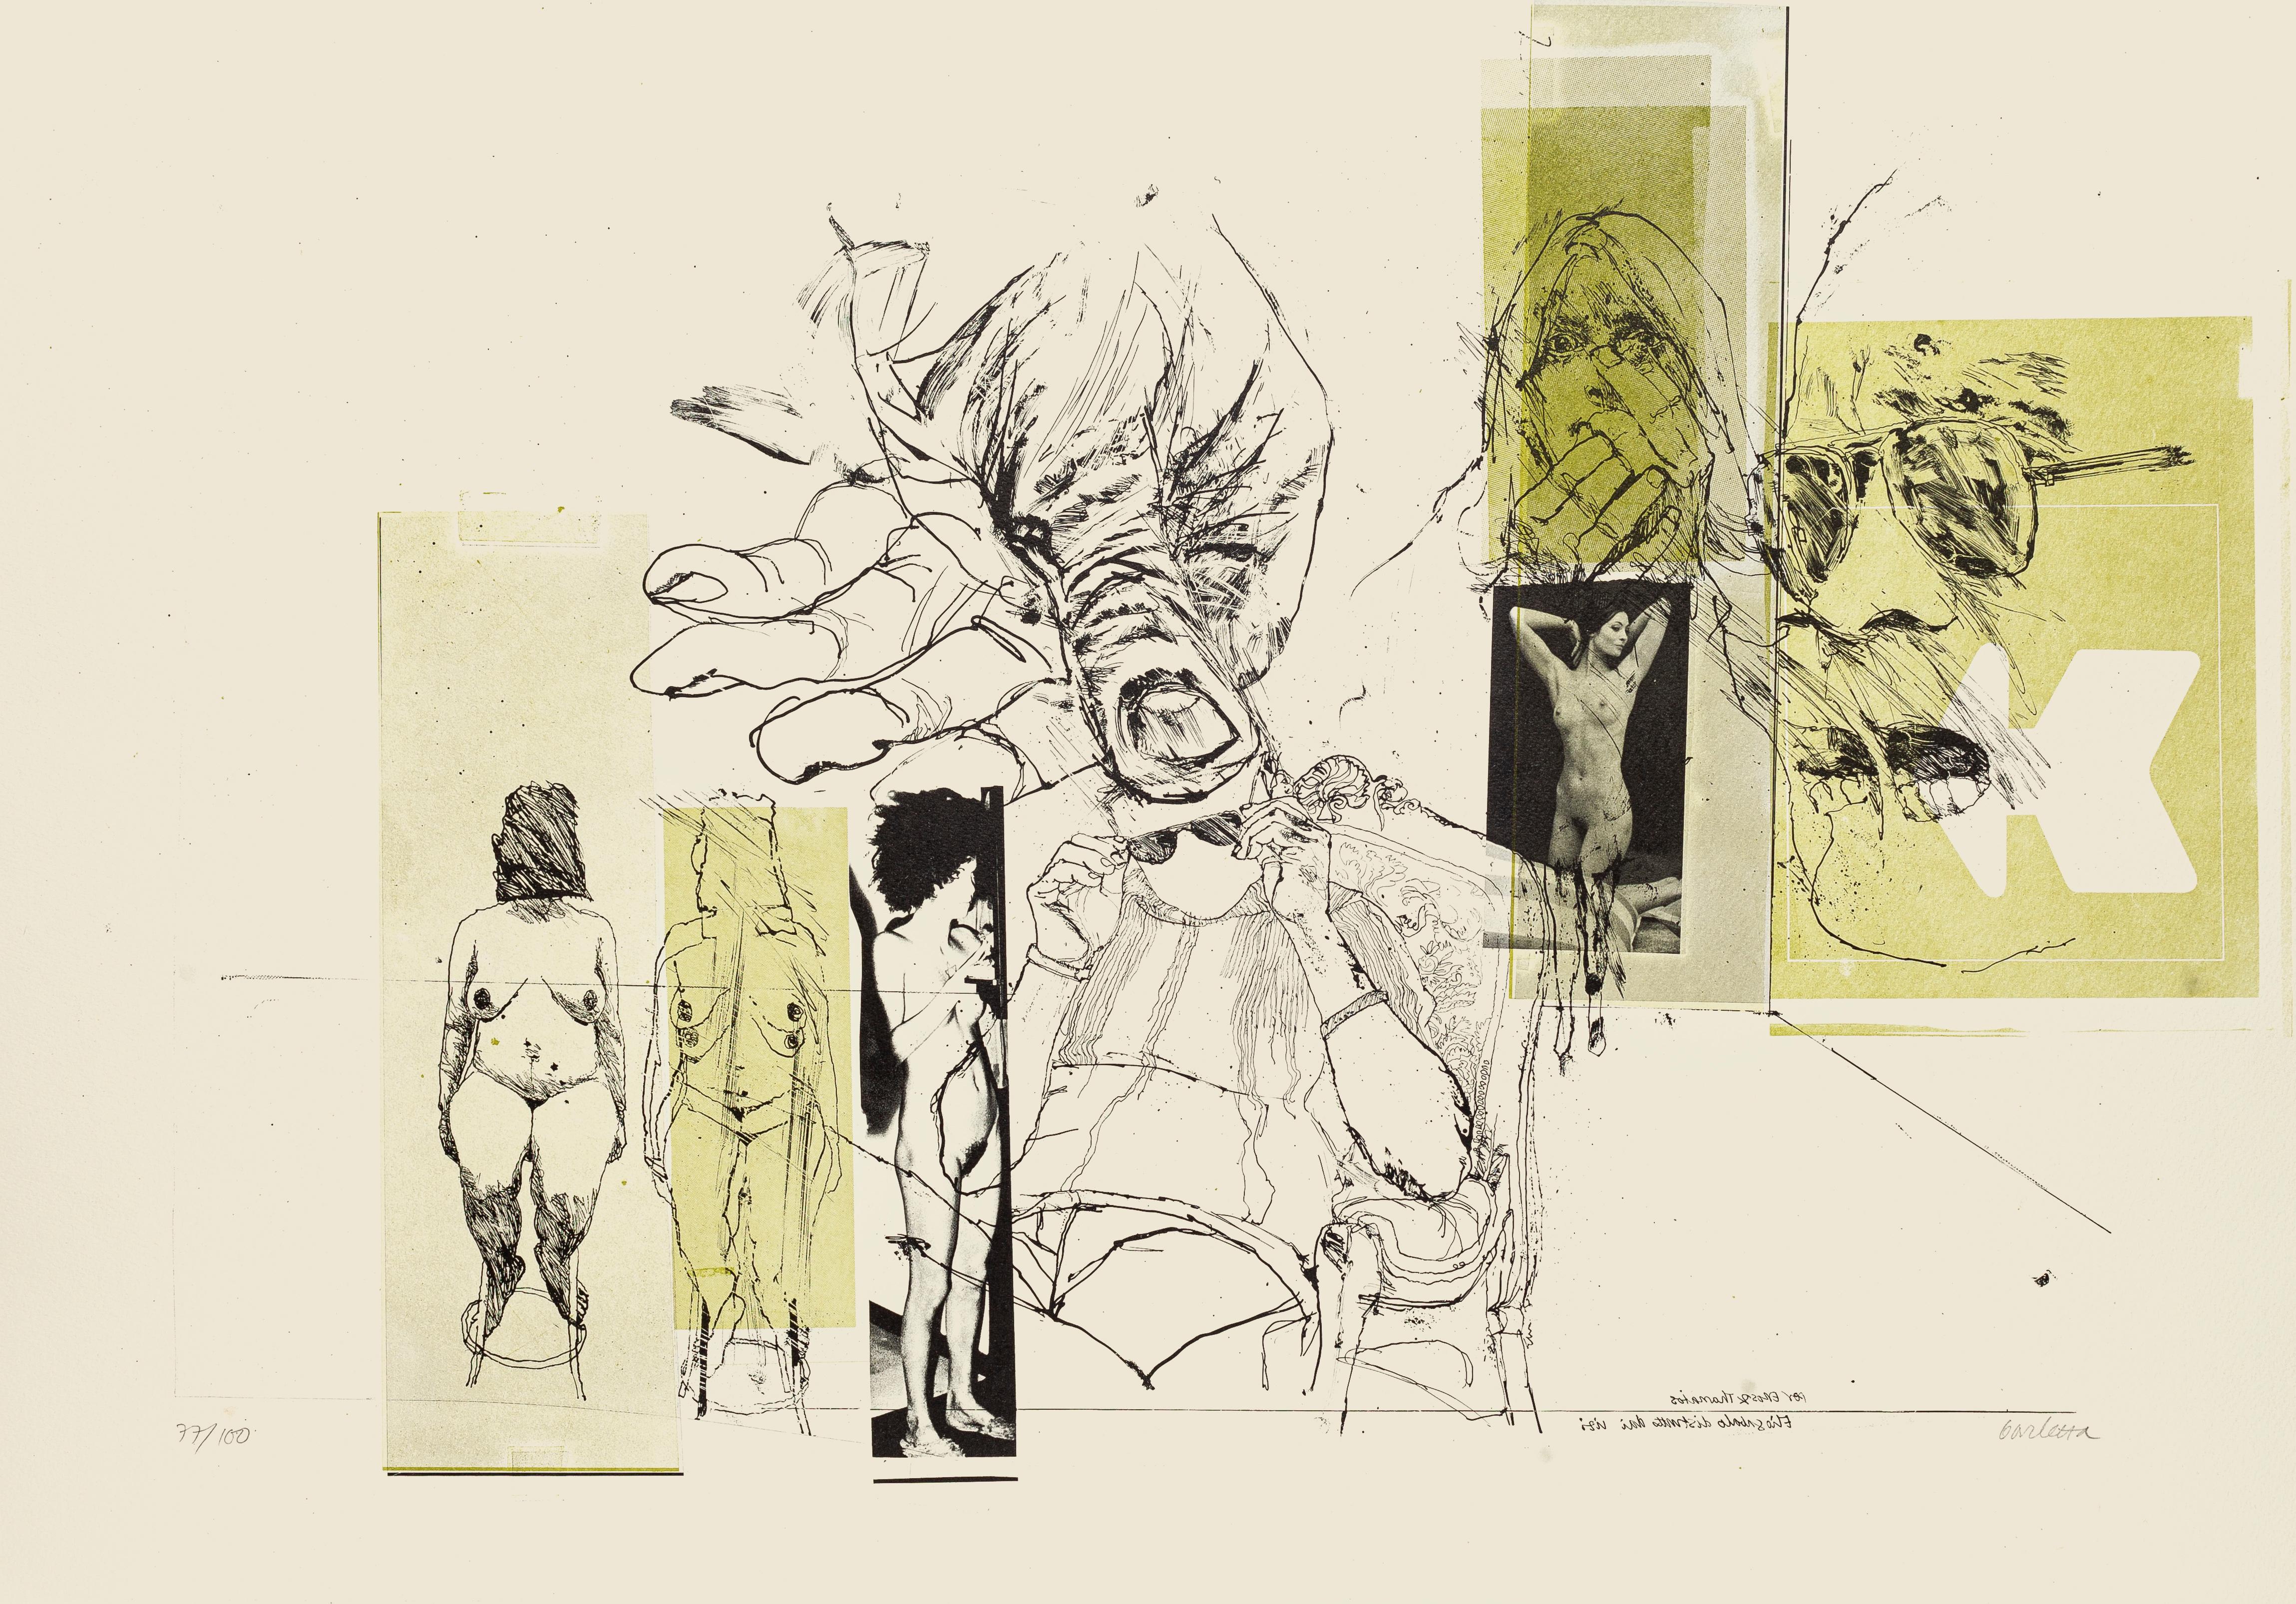 Sergio Barletta Print - Nude and Hand - Original Lithograph by Sergi Barletta - 1970s